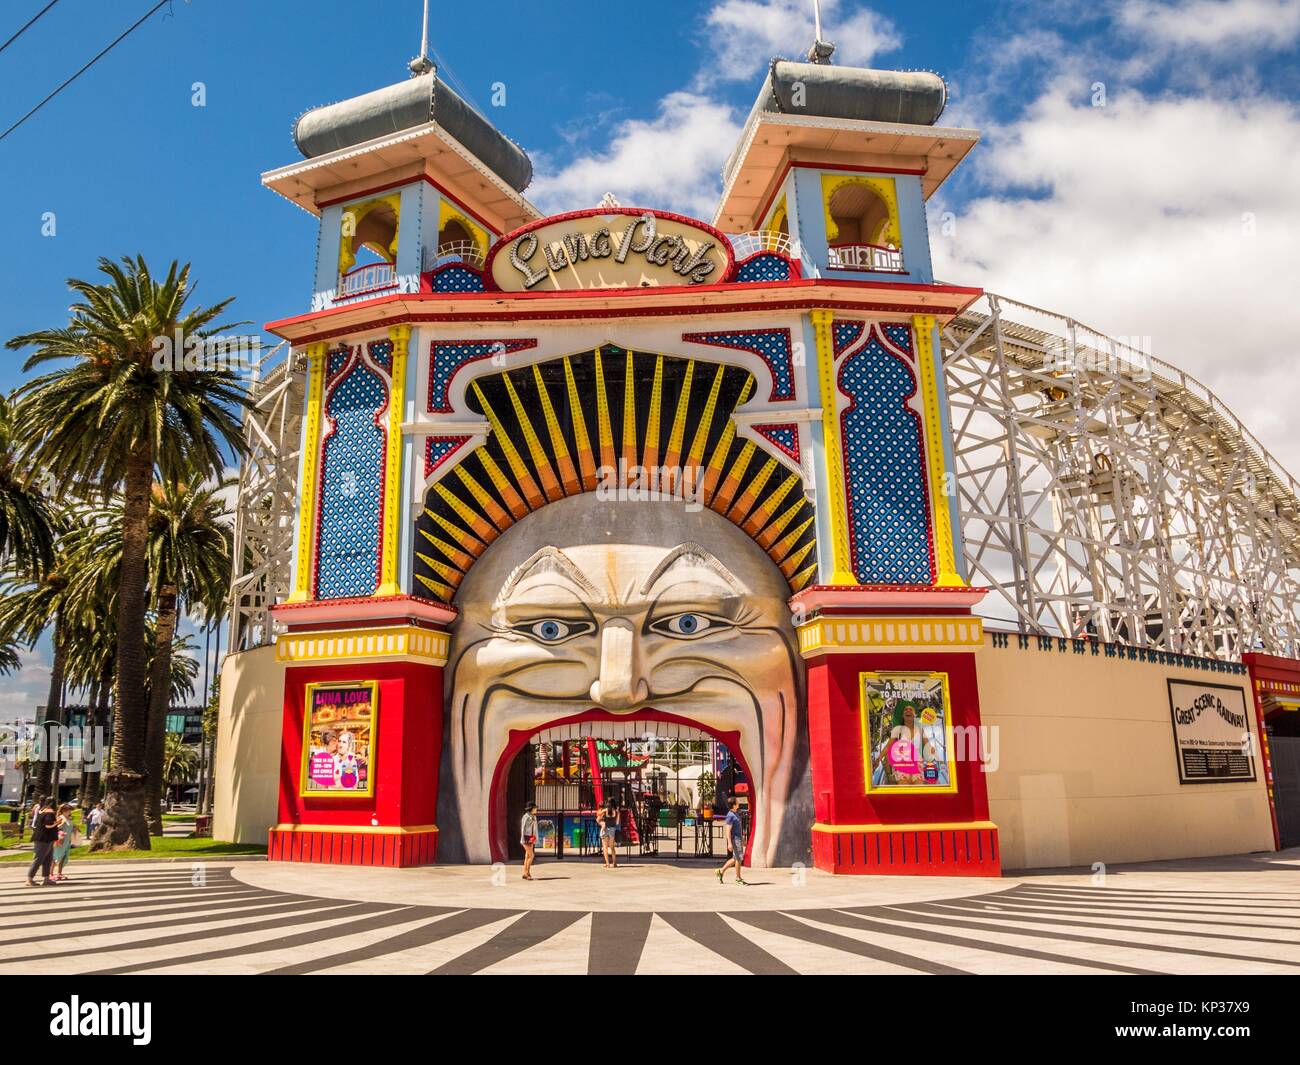 Luna Park Funfair at St Kilda, Melbourne, Victoria, Australia. Stock Photo